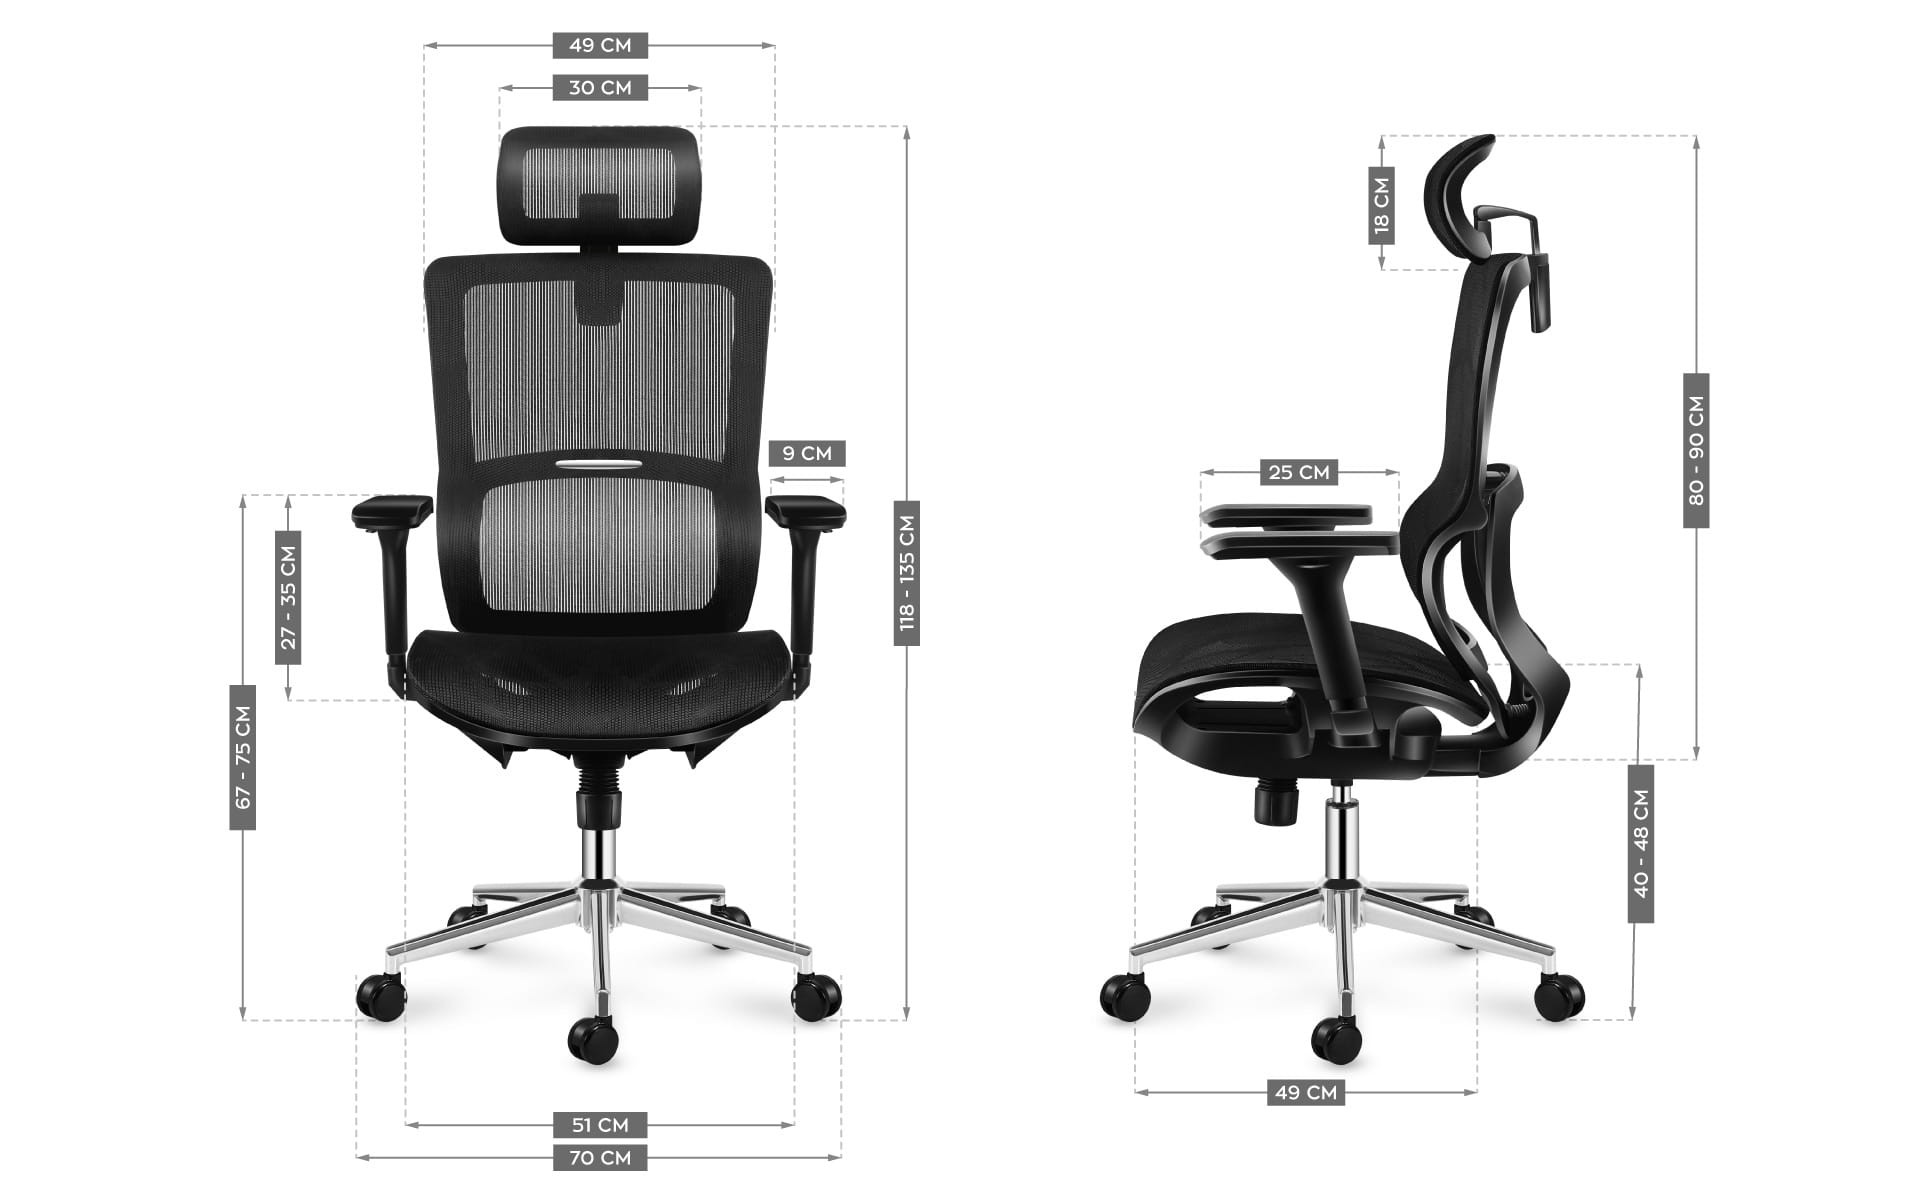 Kancelářská židle Mark Adler - Expert 6.2